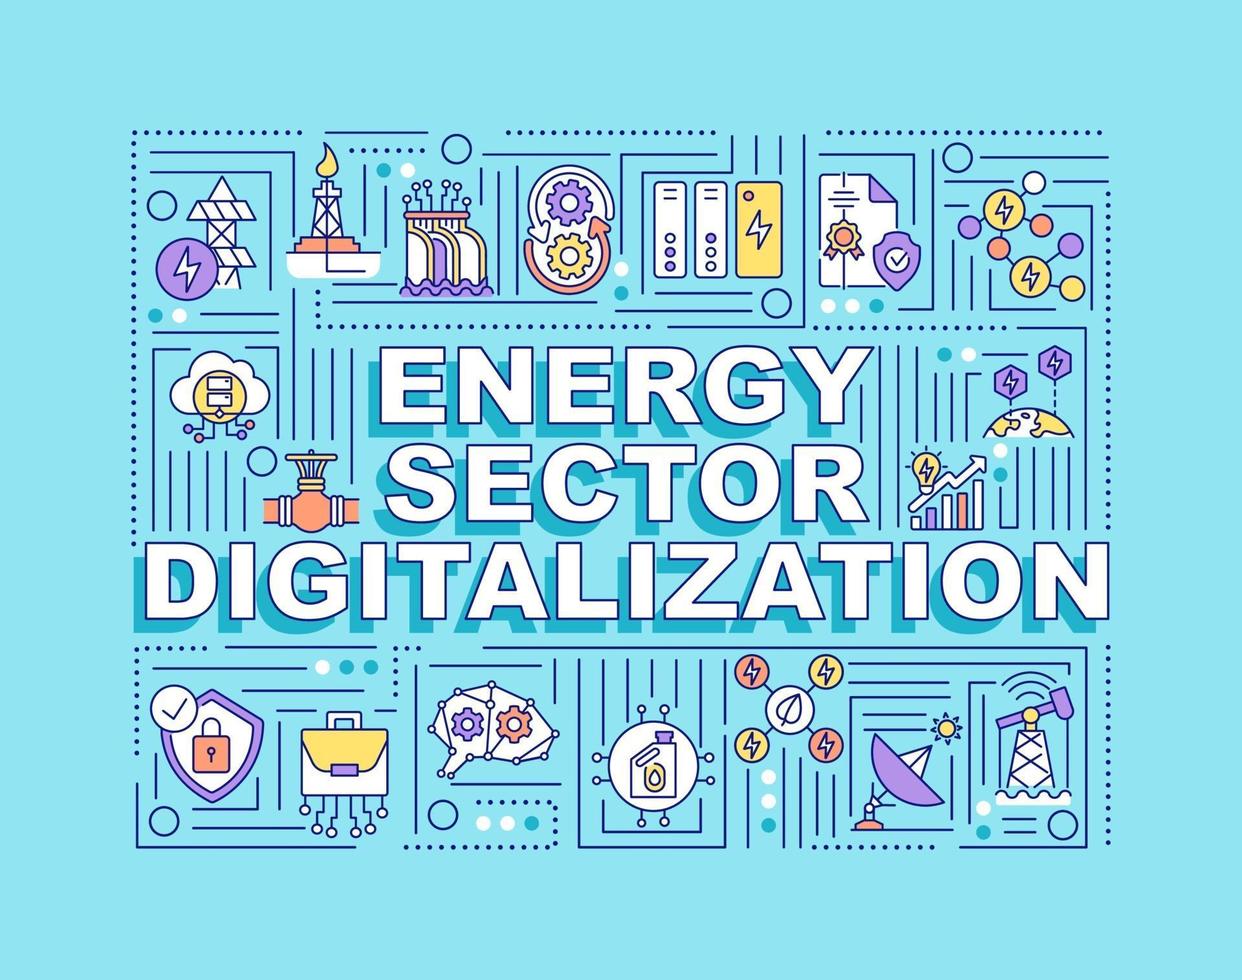 Energiesektor Digitalisierung Wort Konzepte Banner vektor